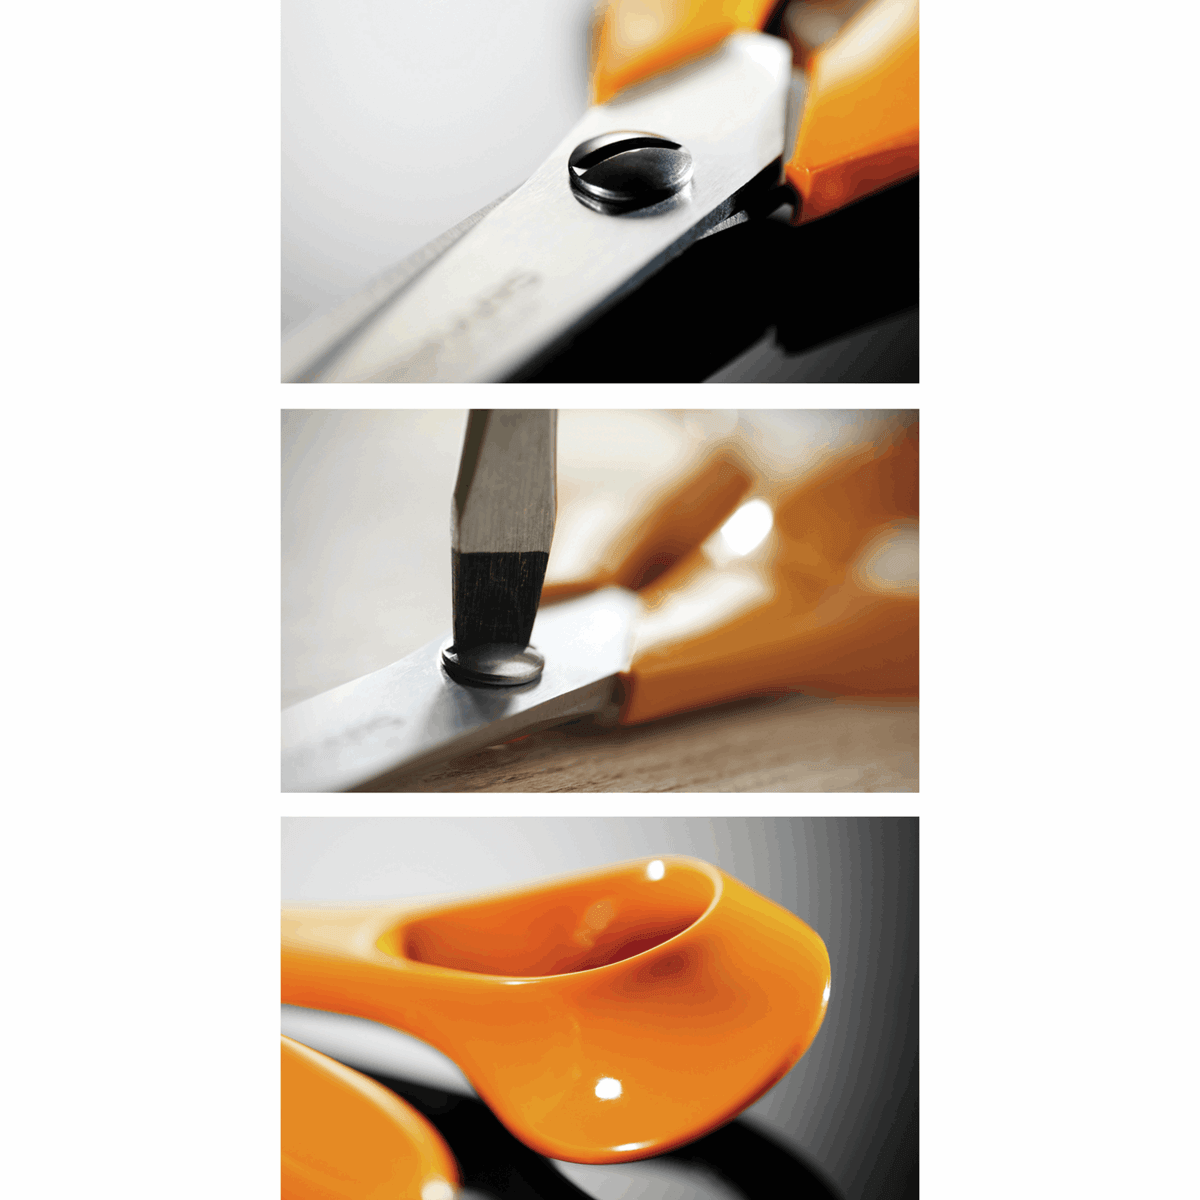 General Purpose Scissors from Fiskars, 21 cm - Orange (RH)-Accessories-Jelly Fabrics